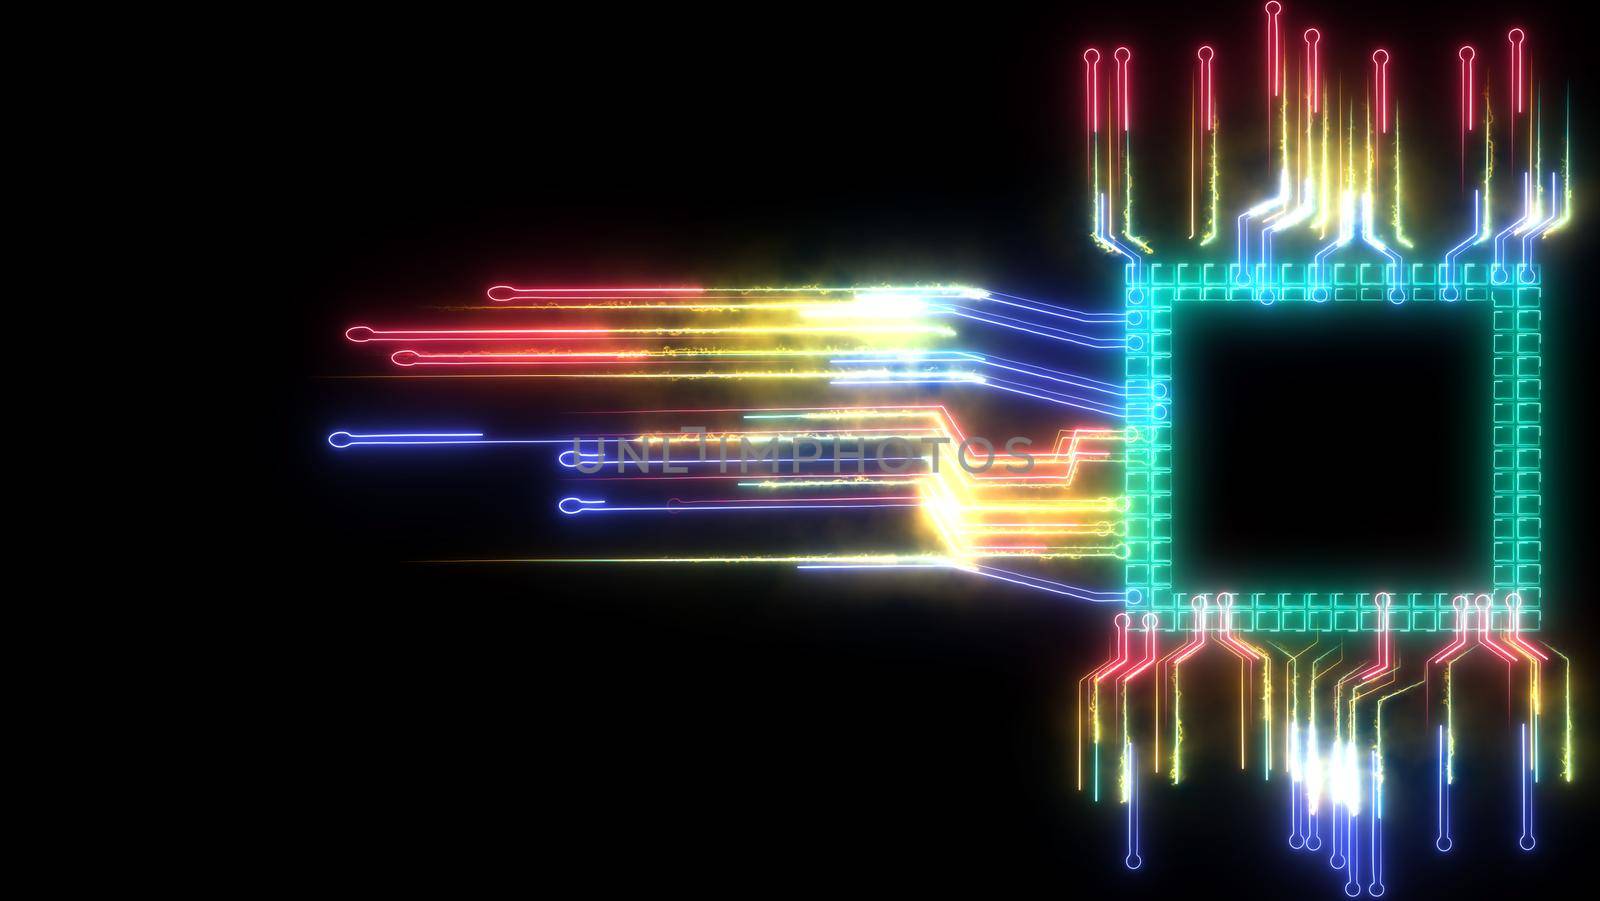 Futuristic abstract rainbow digital intelligent twisted light high speed chip data processing by Darkfox